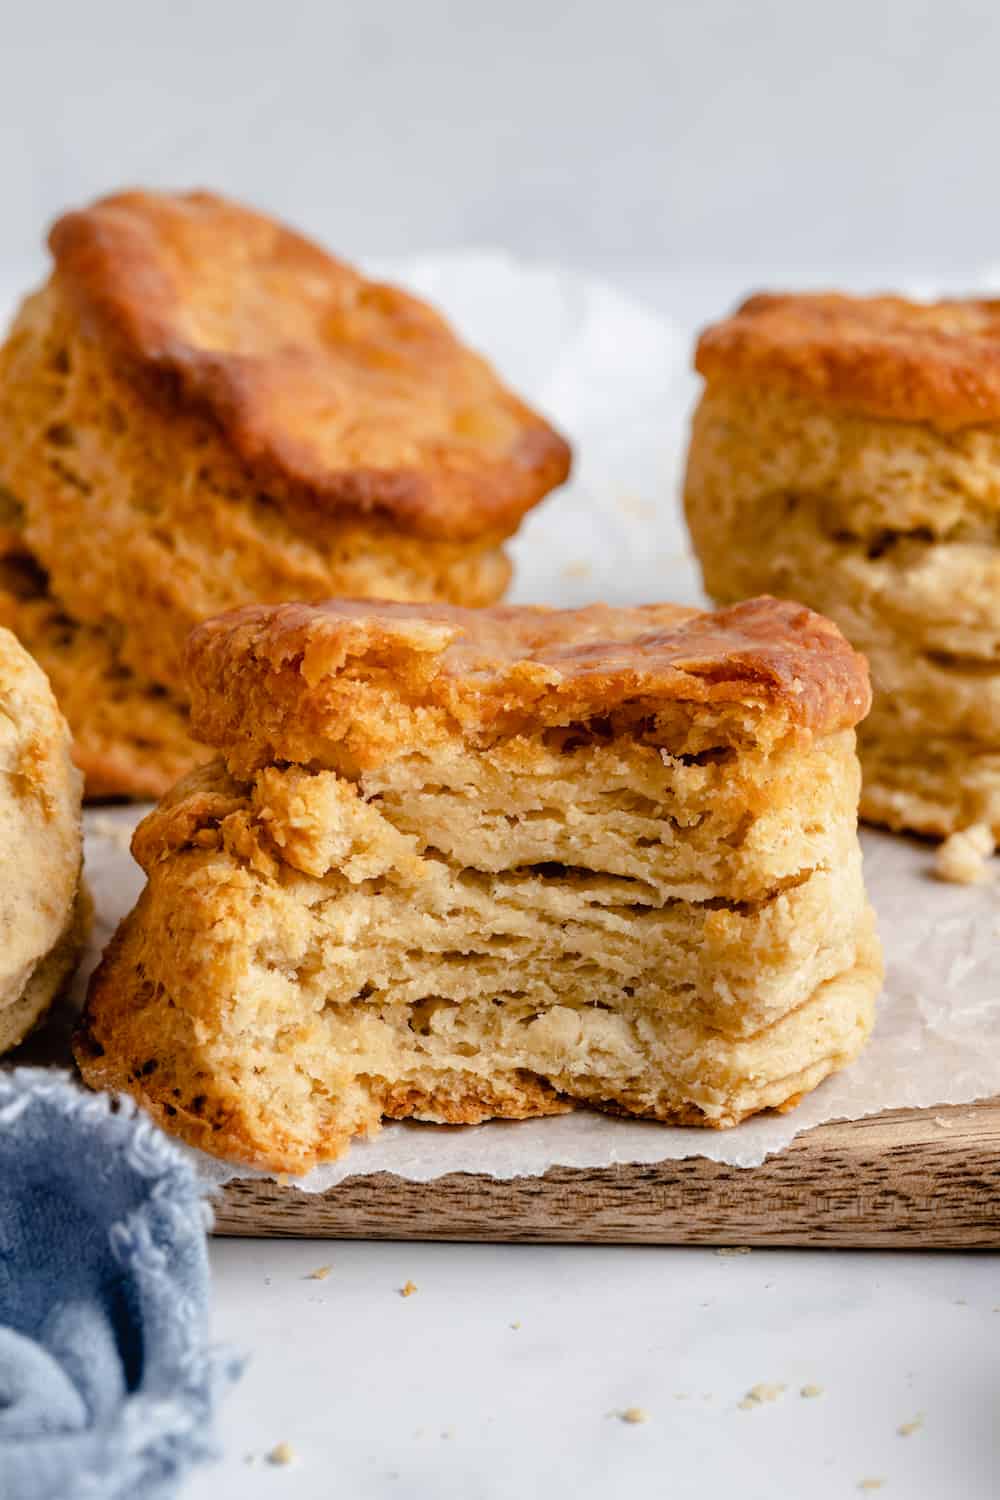 Easy Vegan Biscuit Recipe | How to Make Gluten-Free Bread